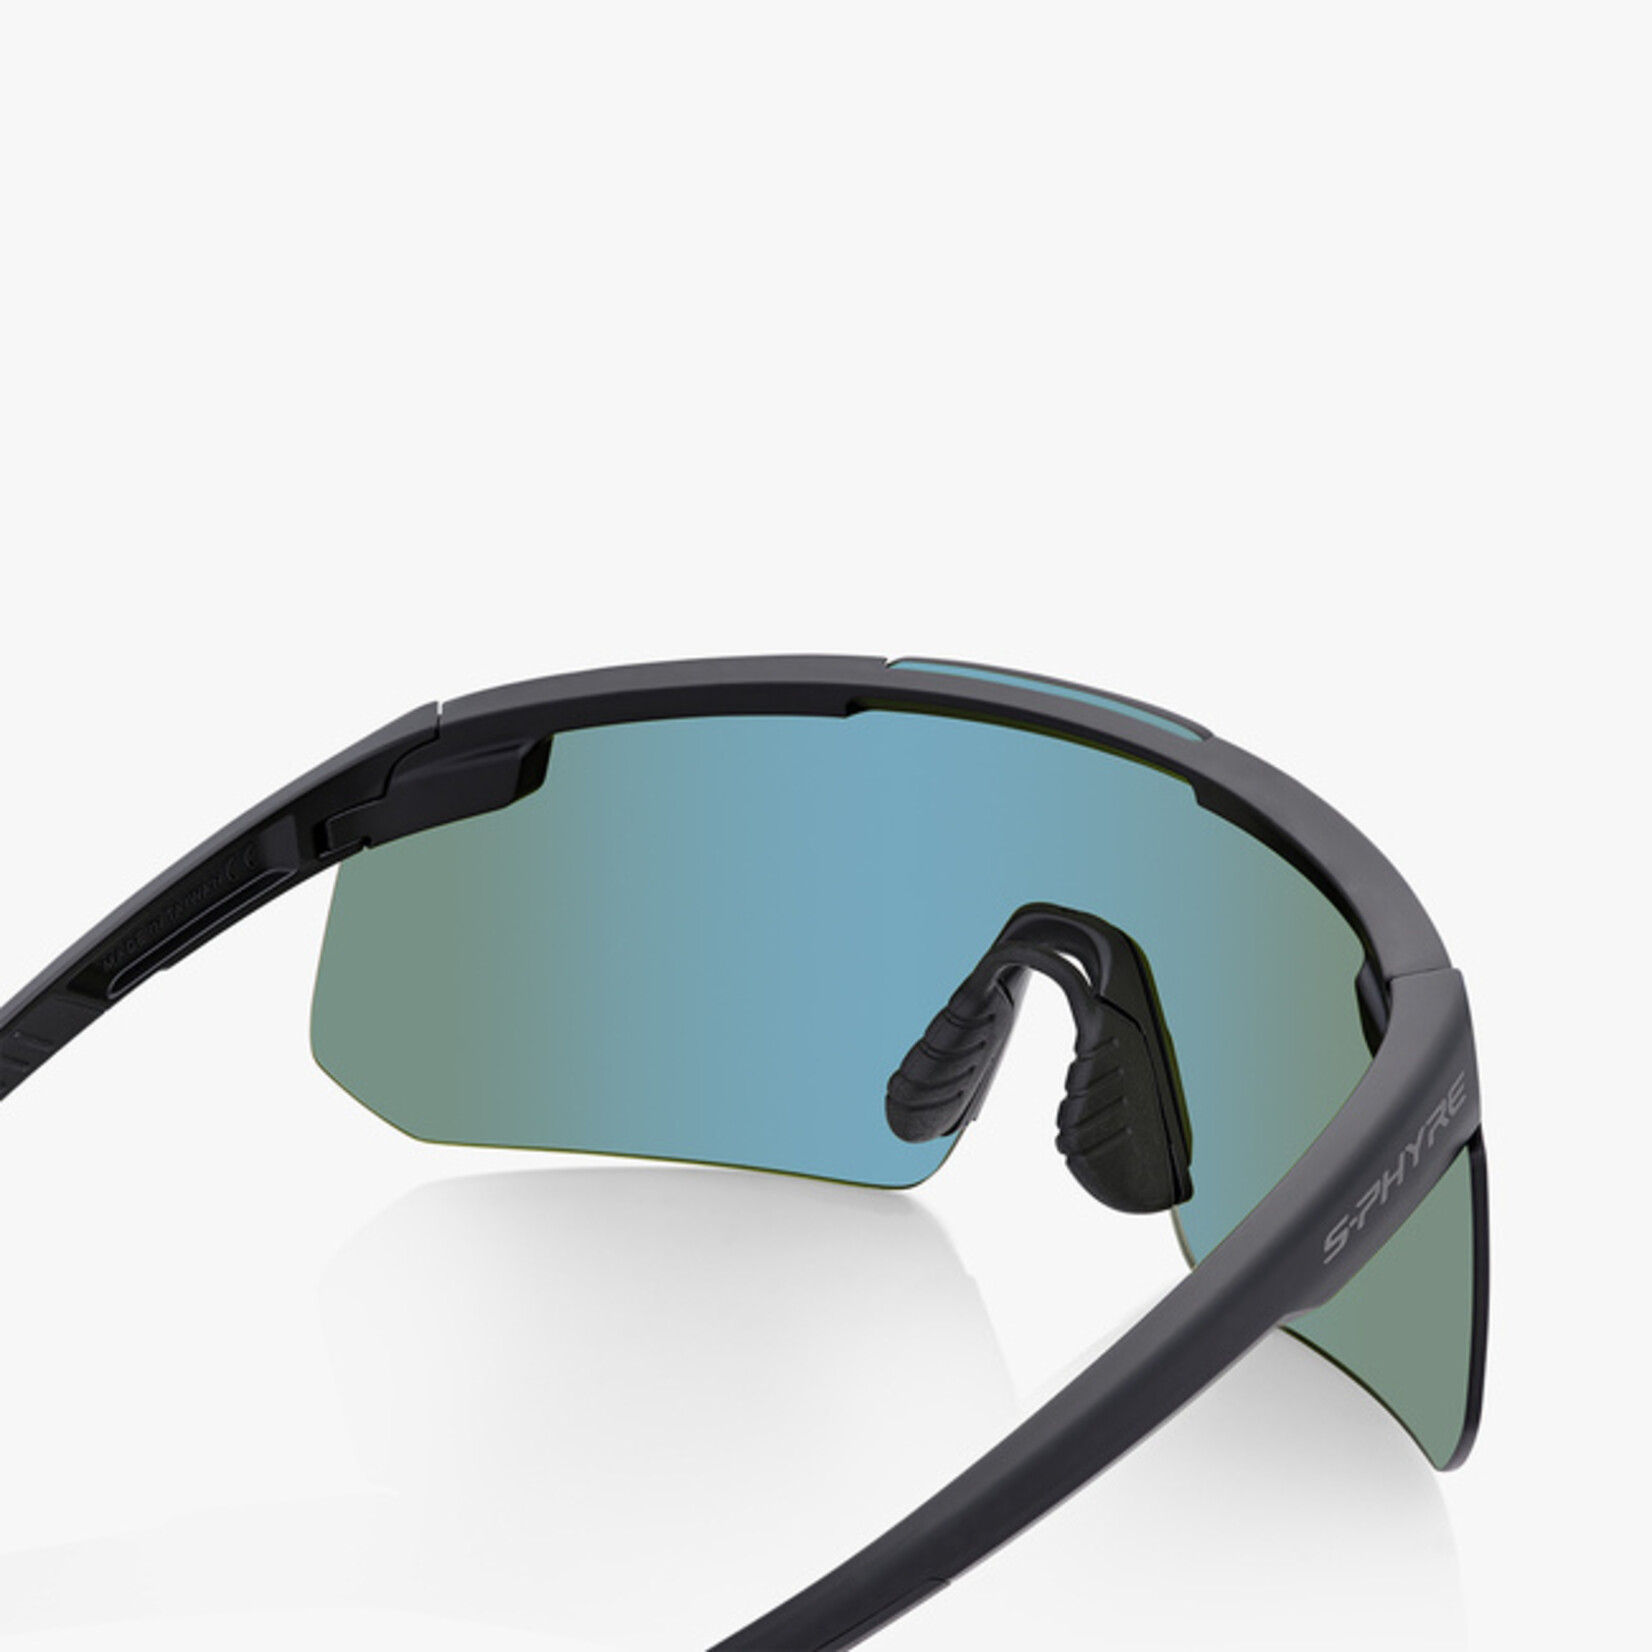 SHIMANO Shimano S-Phyre Magnetic Sunglasses